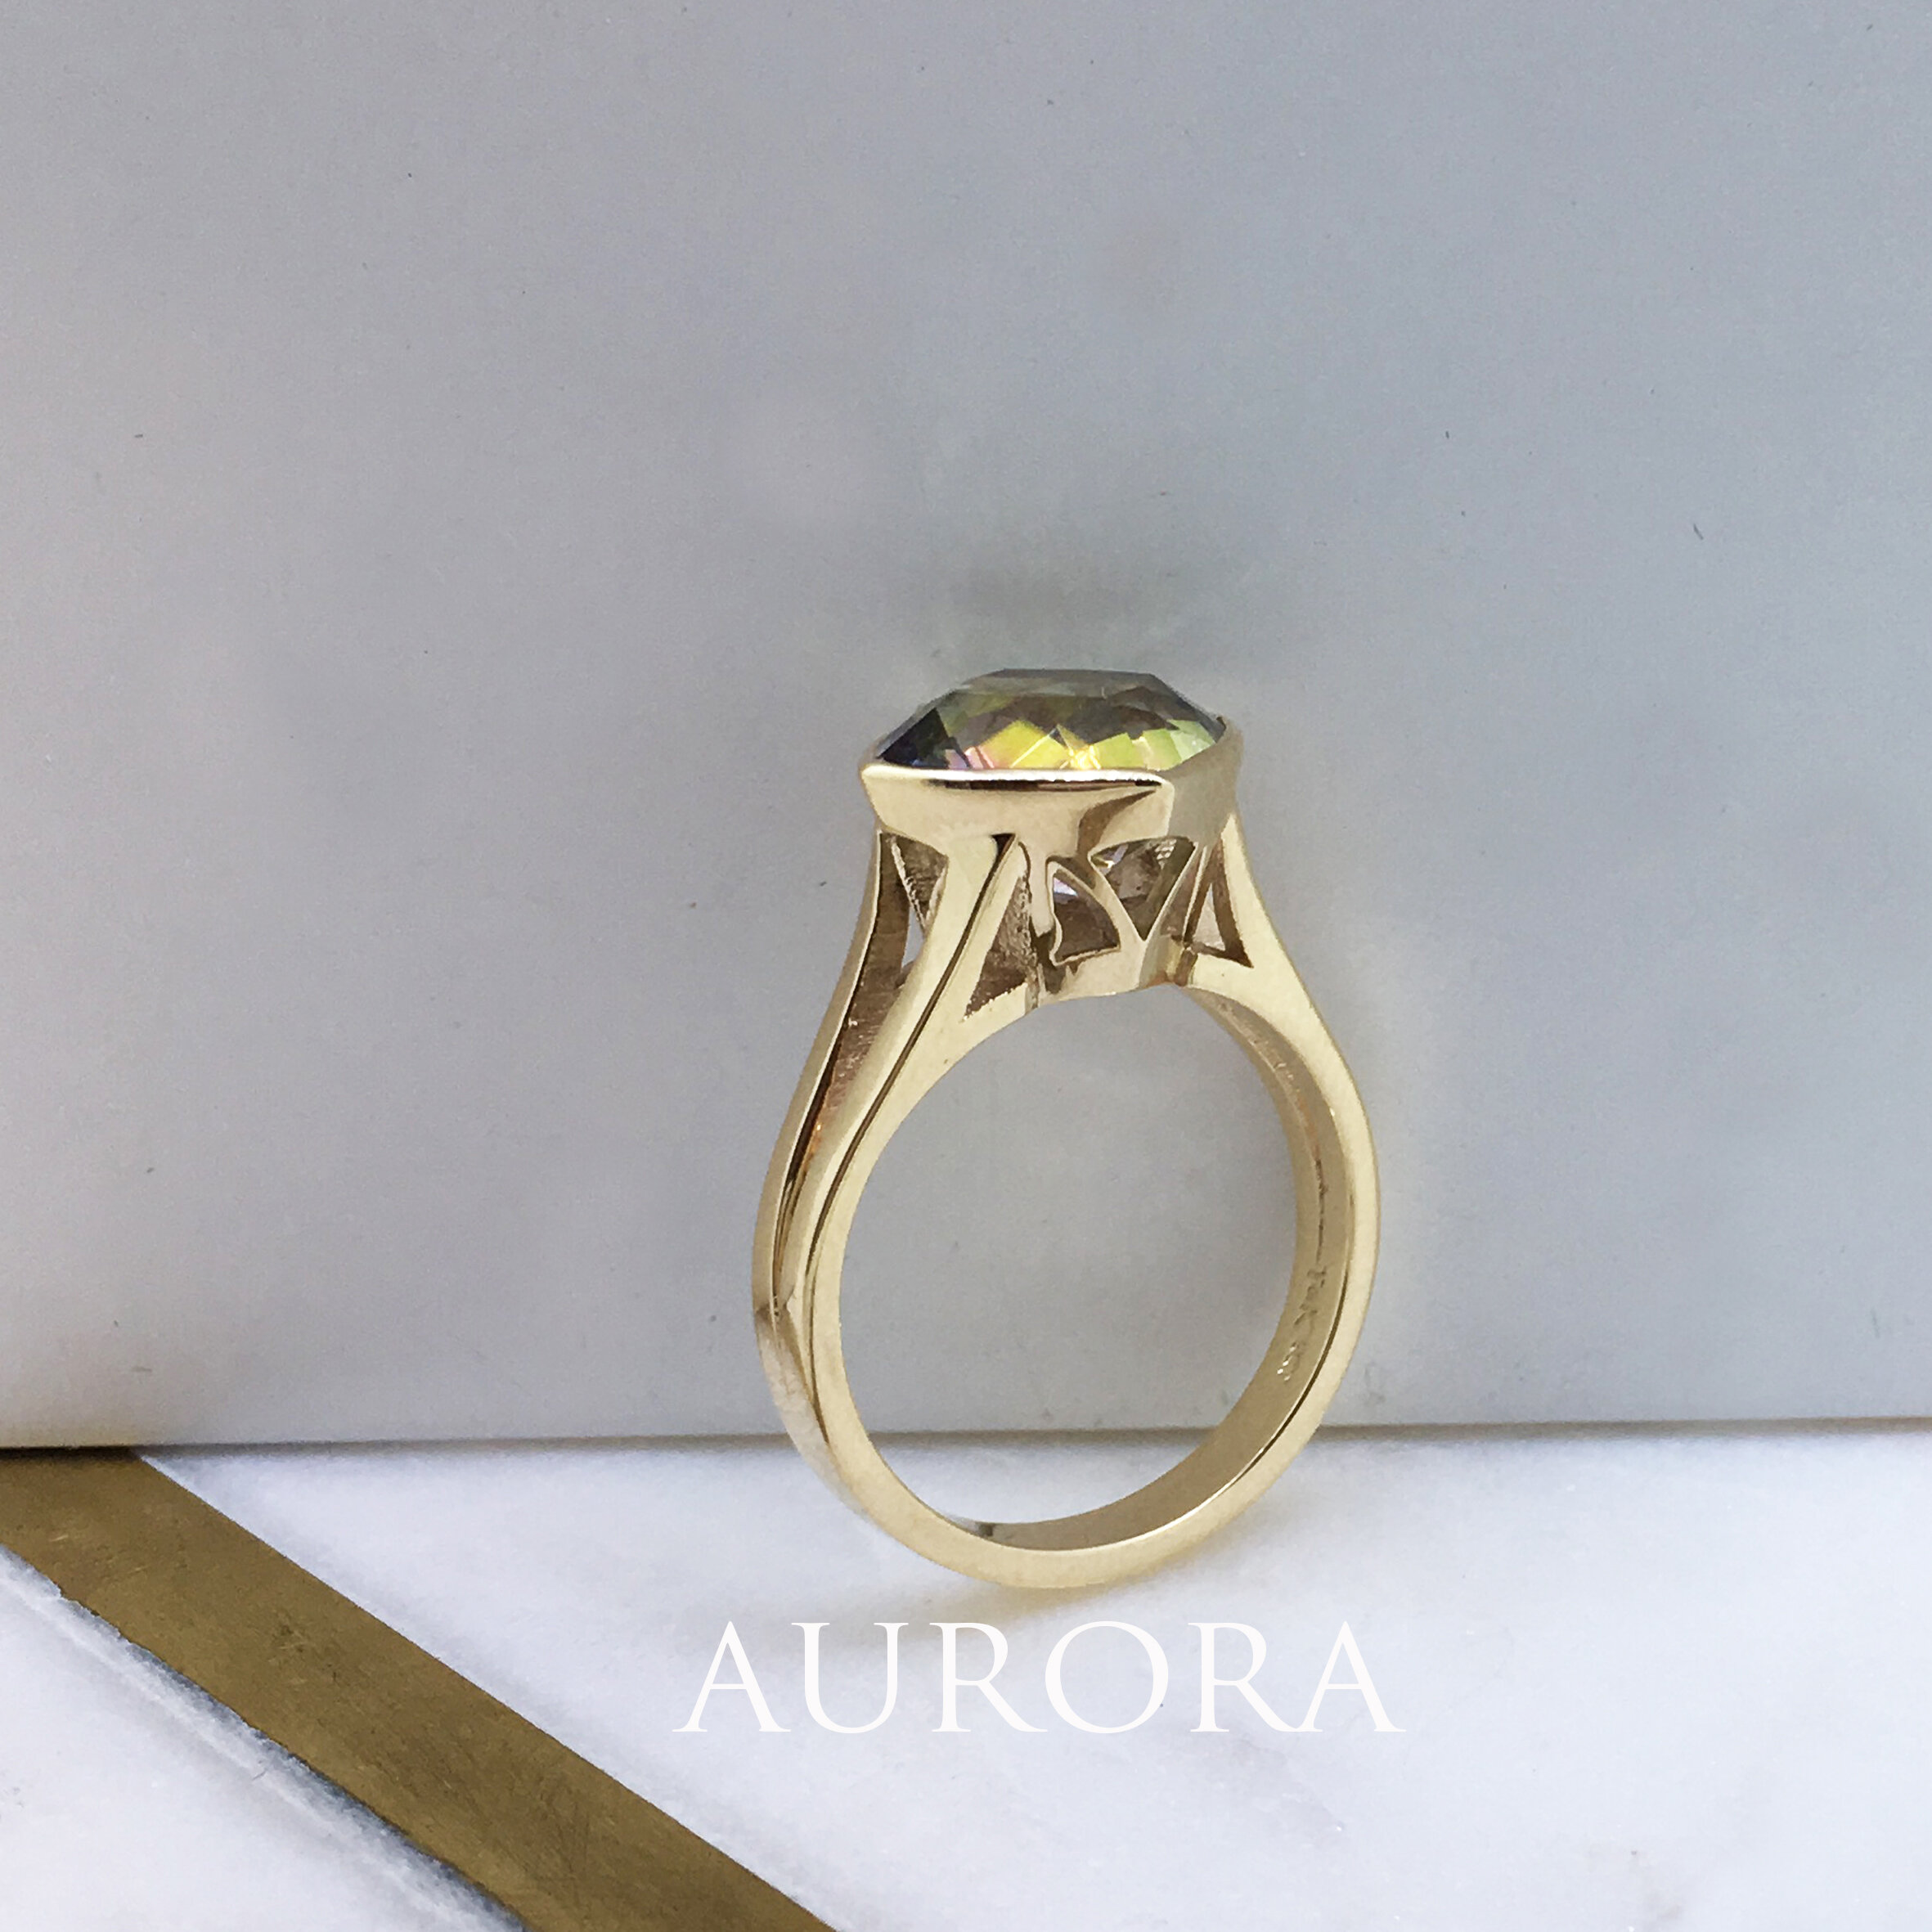 Aurora Ring Collection Banner copy.jpg